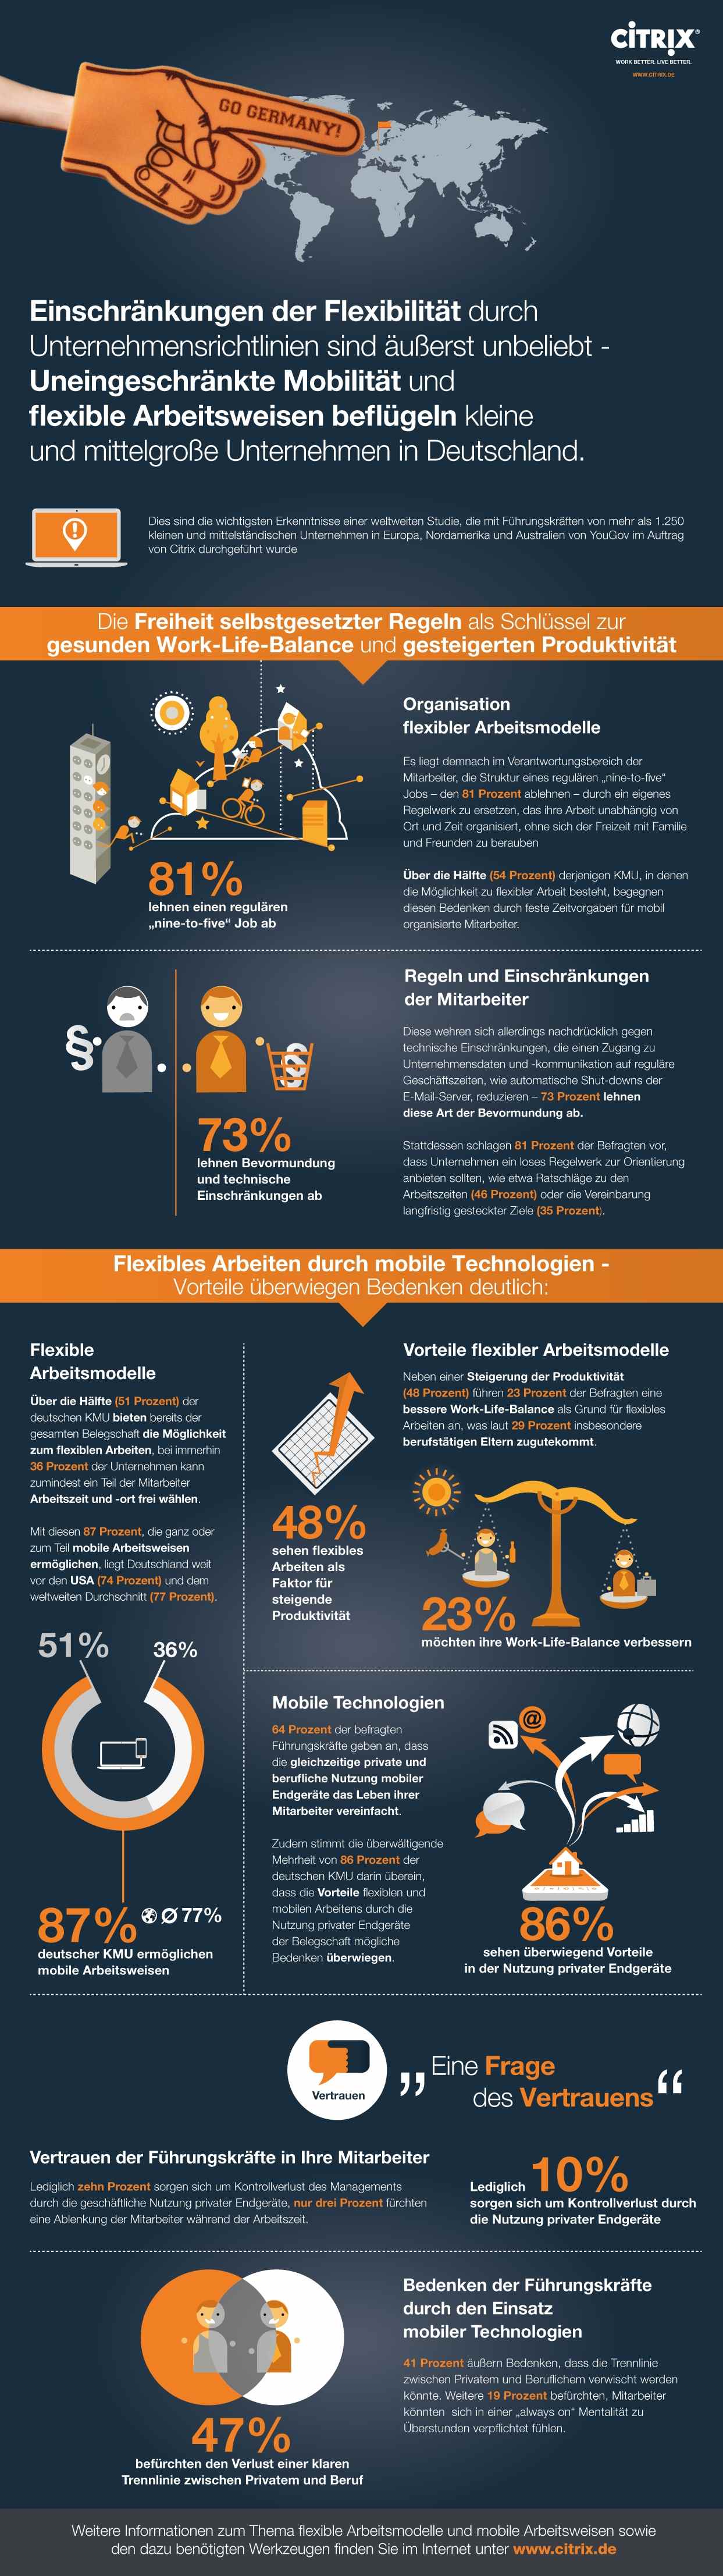 Infografik: Flexible Arbeitsmodelle in KMU, Quelle: Citrix